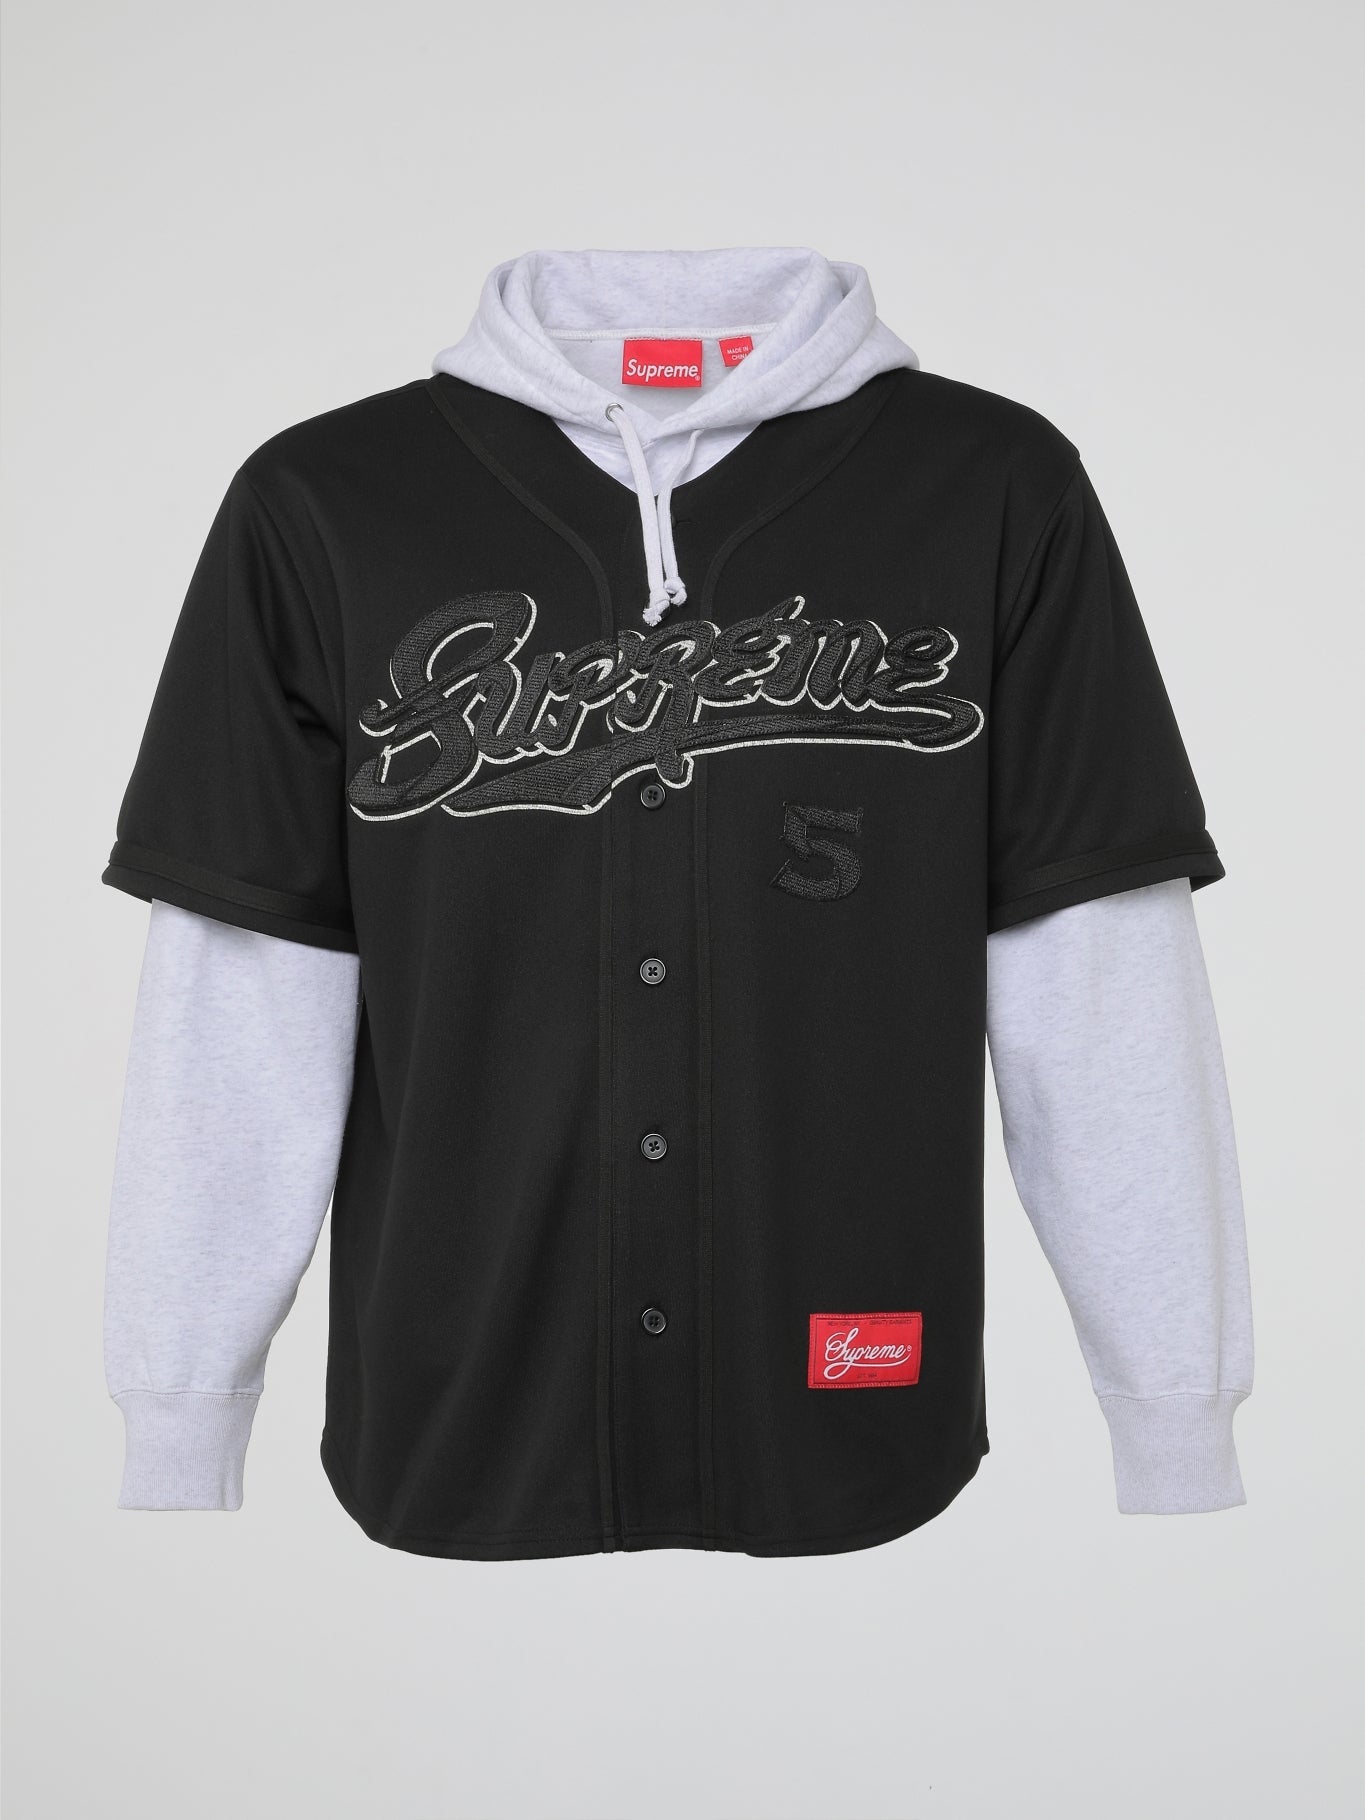 Supreme BaseballJerseyHoodedSweatshirt - tracemed.com.br